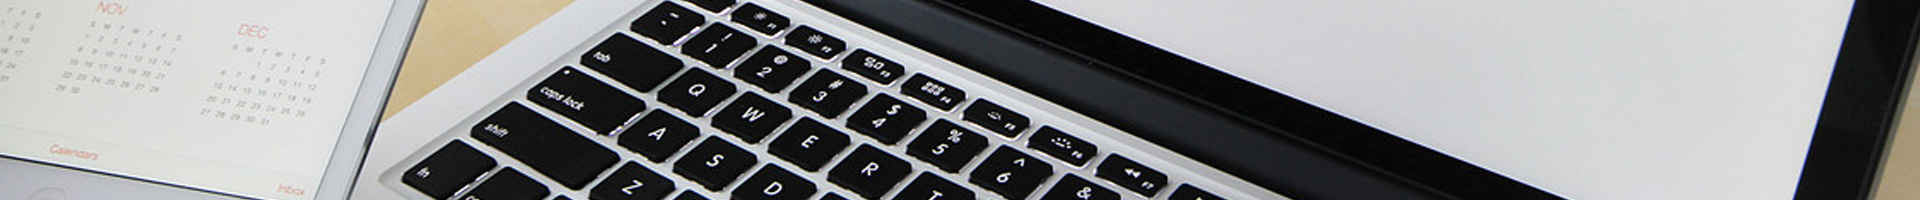 laptop screen